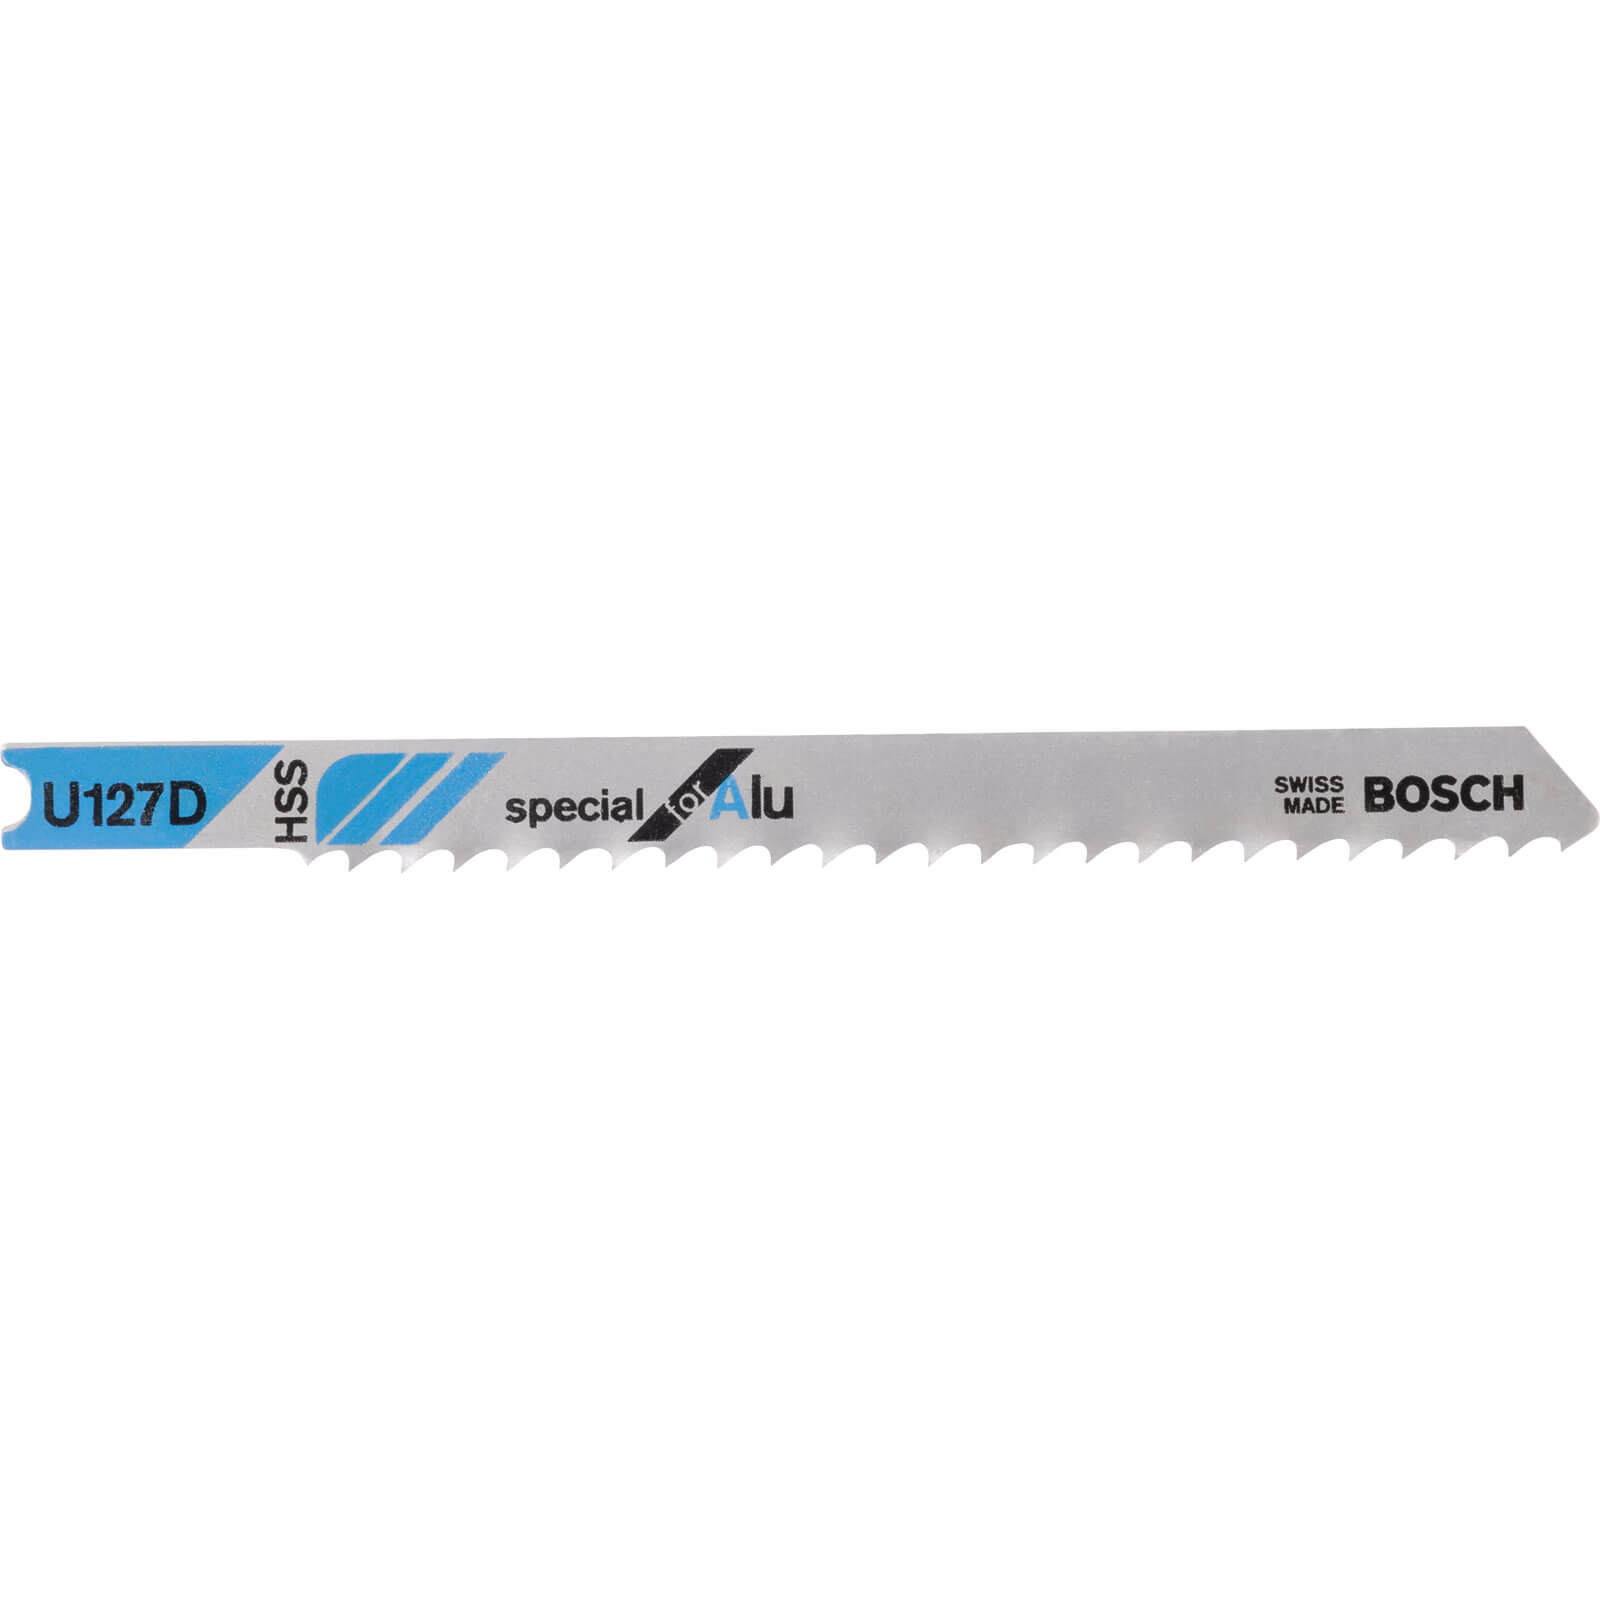 Image of Bosch U127 D Metal Cutting Jigsaw Blades Pack of 3